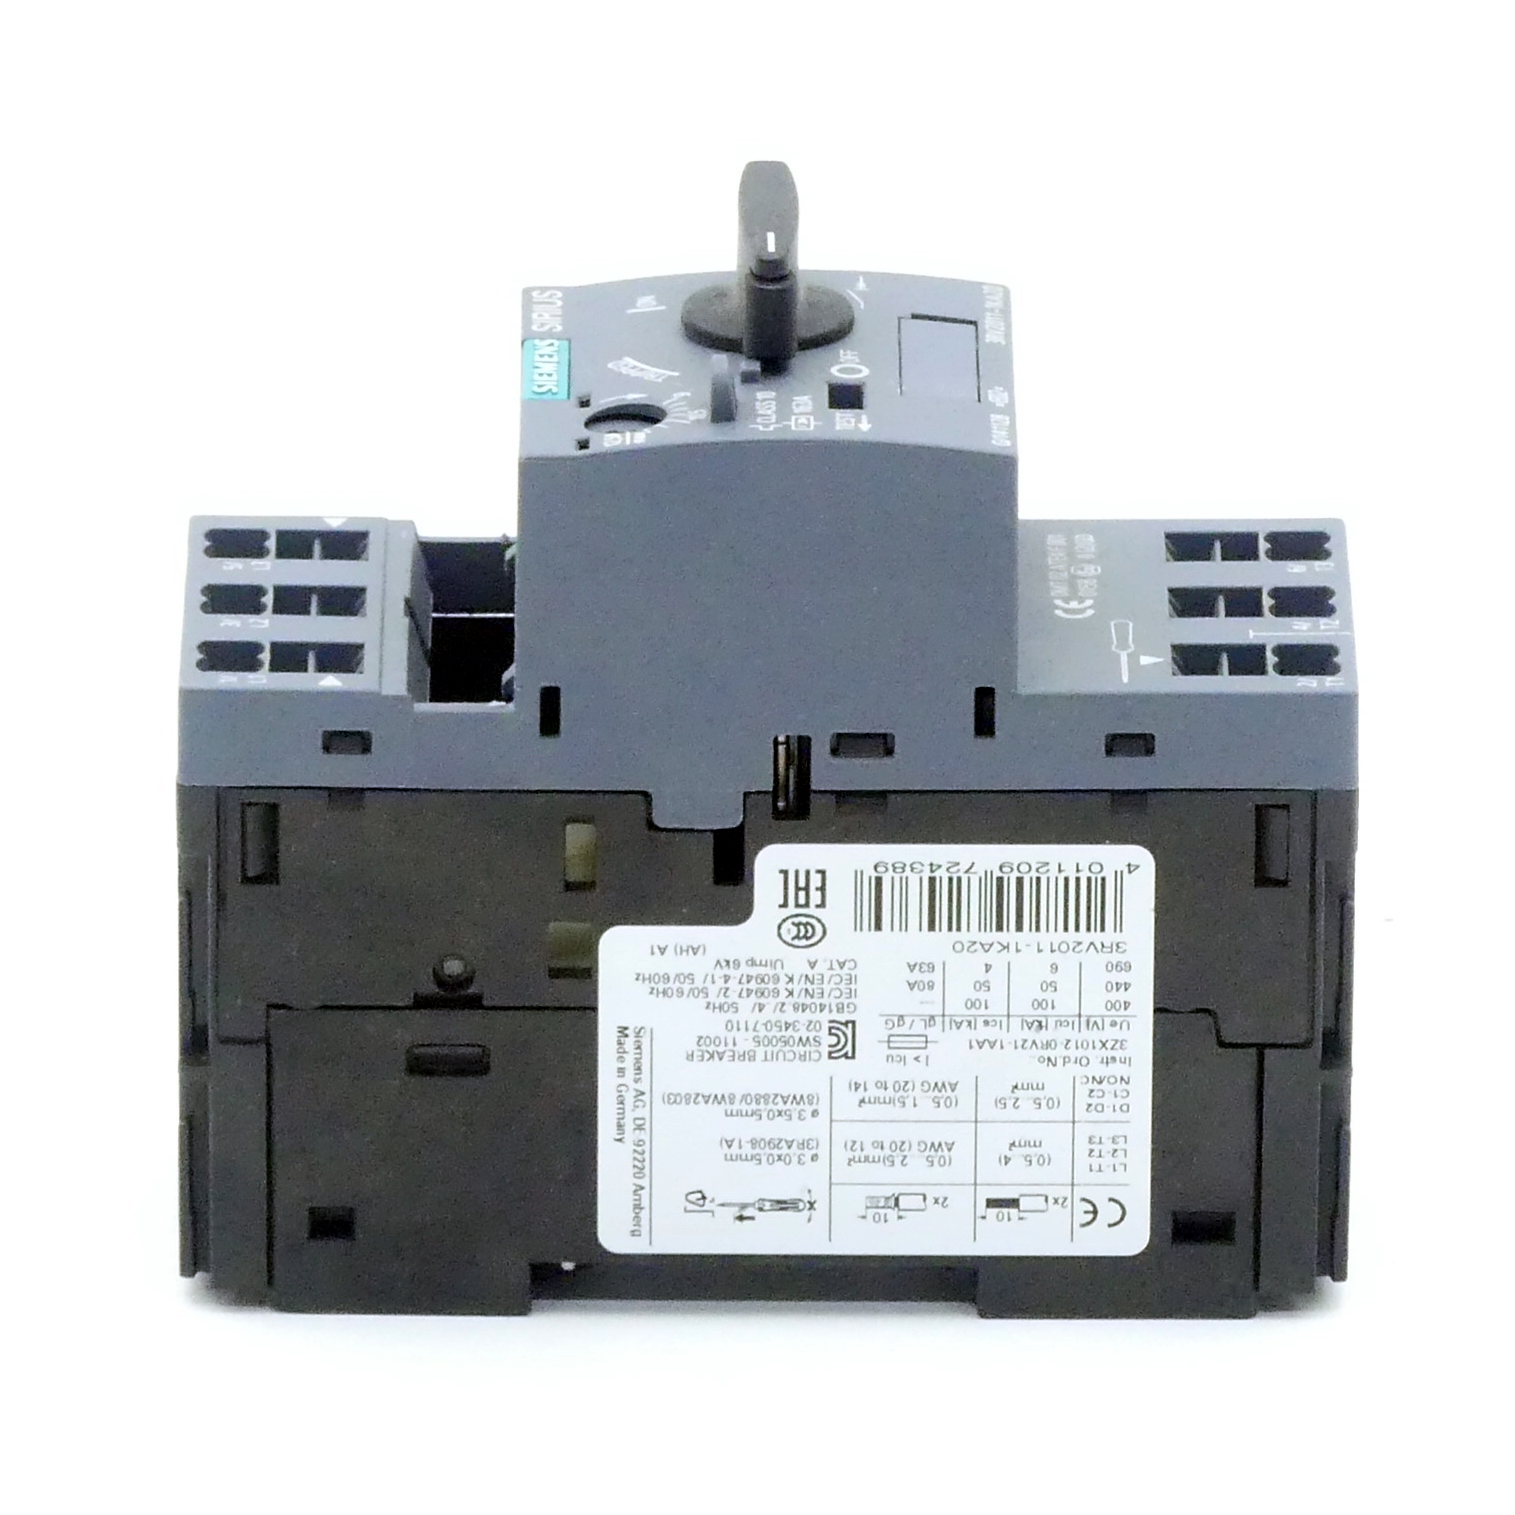 Leistungsschalter 3RV2011-1KA20 